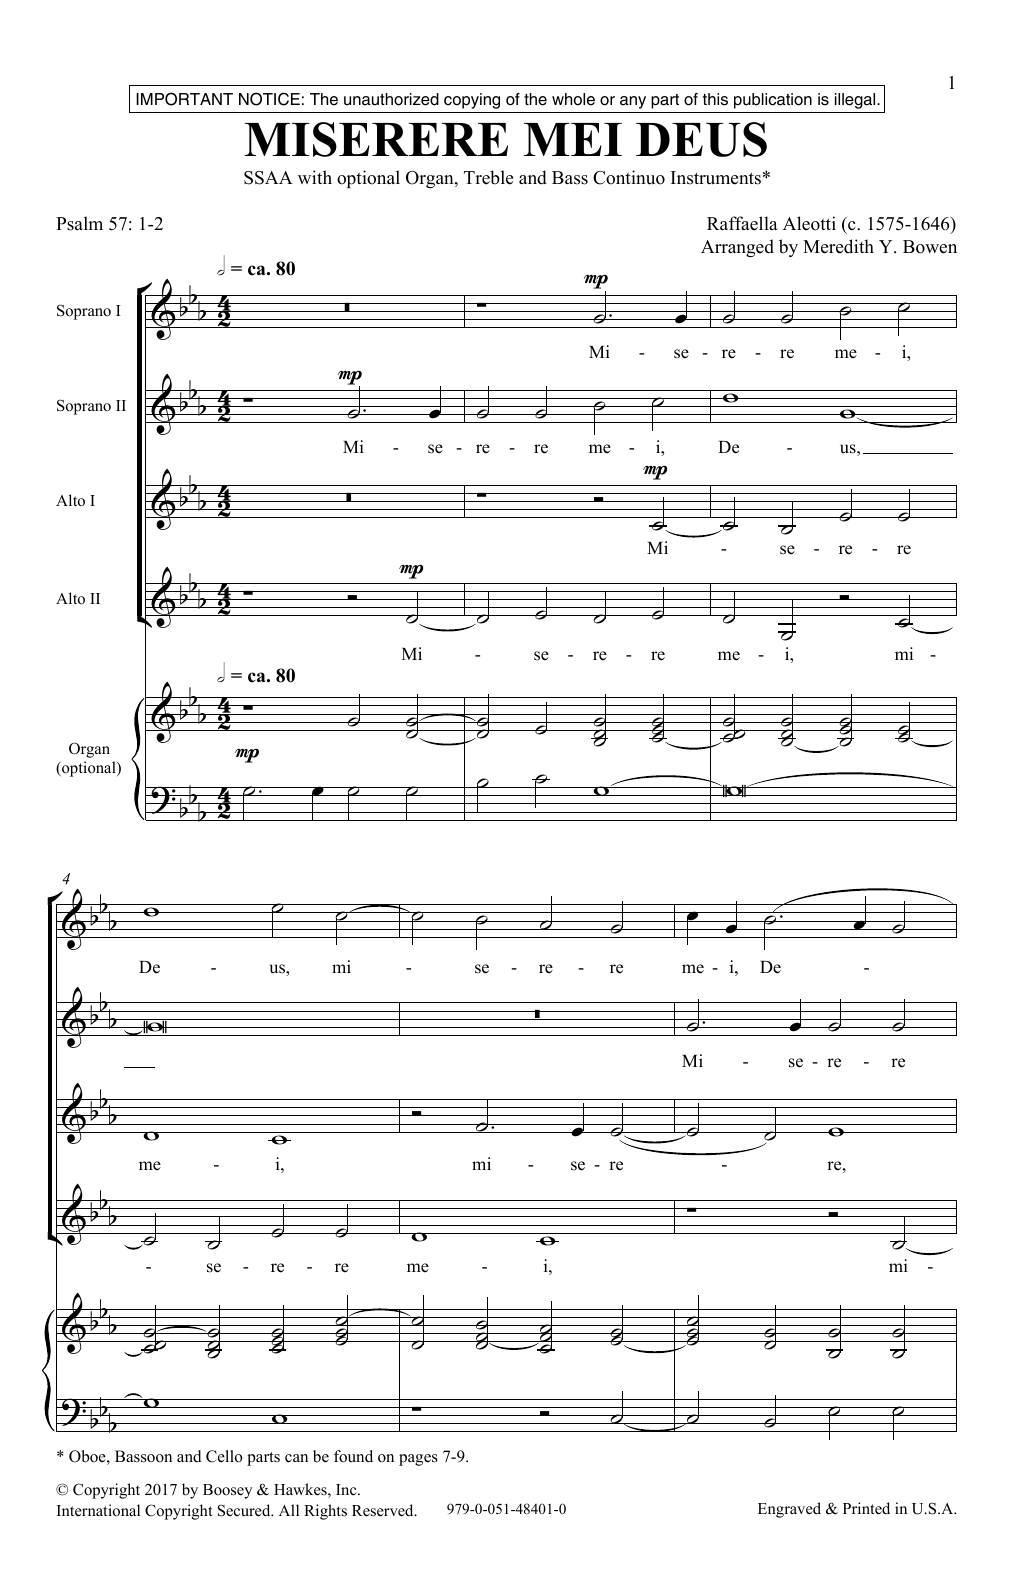 Meredith Bowen Miserere Mei Deus sheet music notes and chords arranged for 2-Part Choir